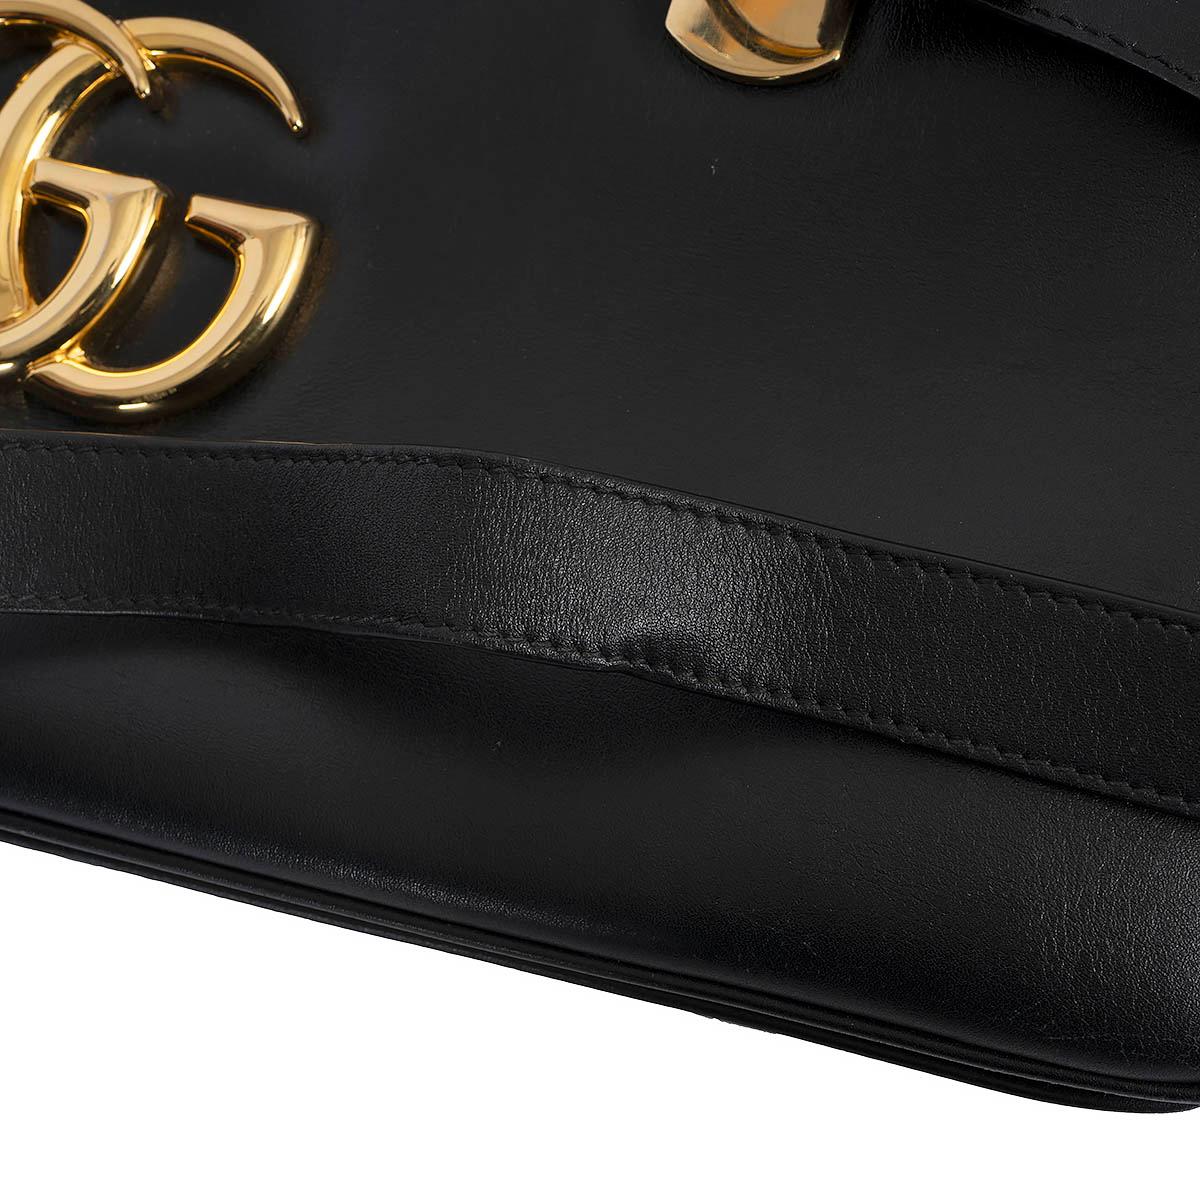 GUCCI cuir noir 2019 ARLI LARGE TOP HANDLE Bag en vente 6